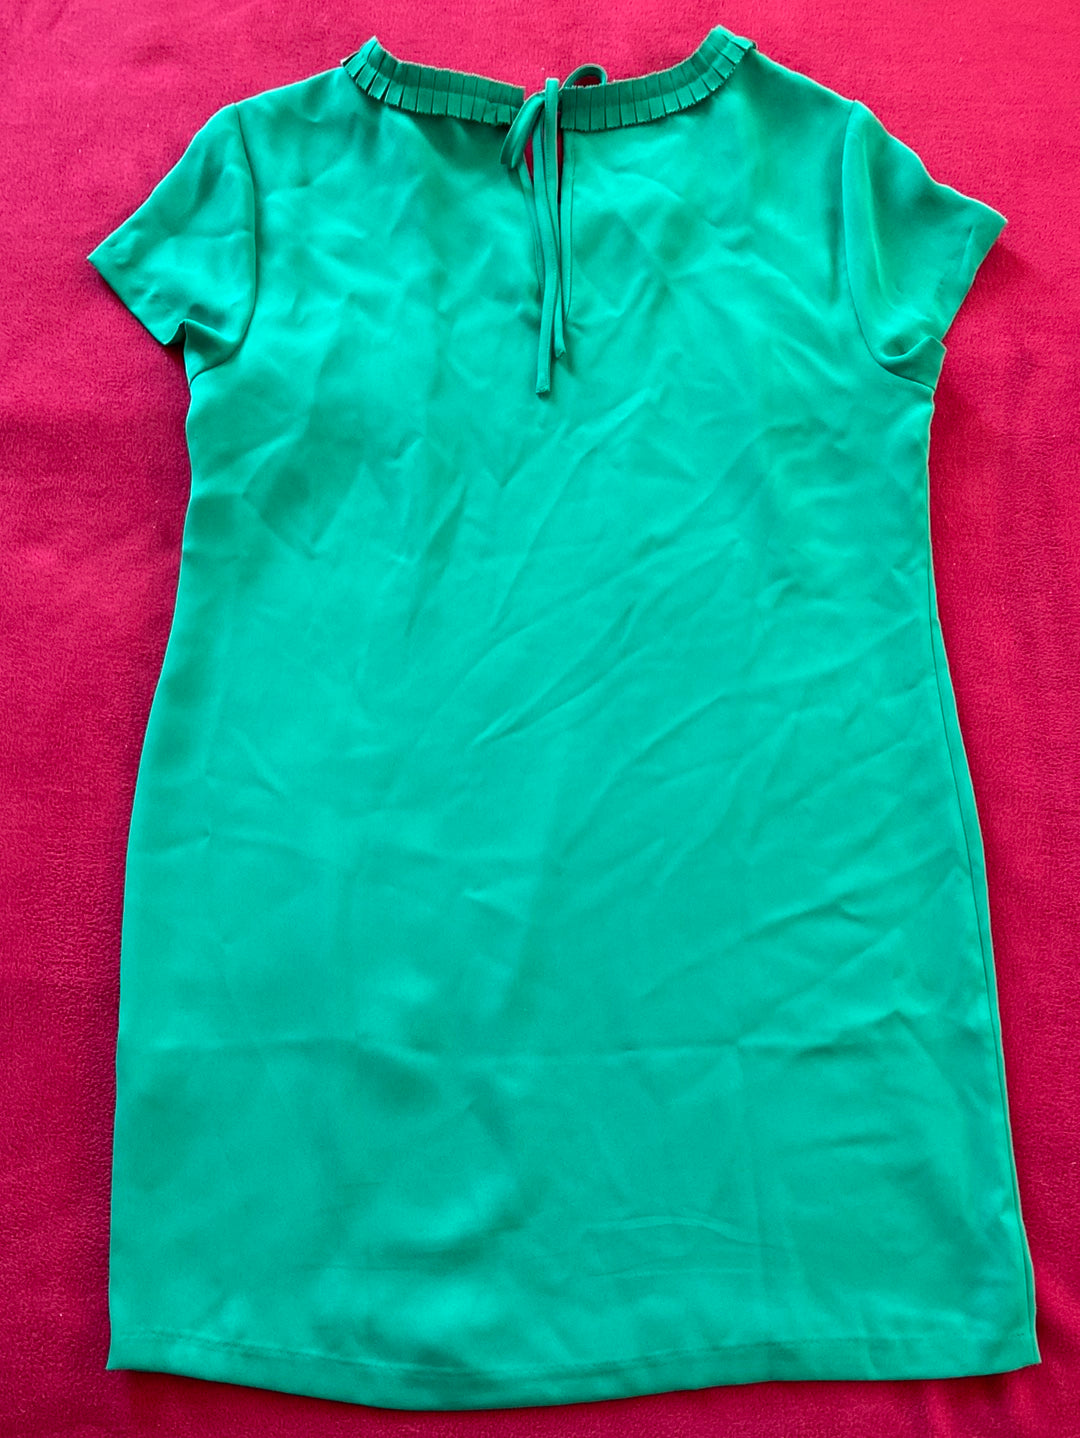 KELLY GREEN Coercion Dress Size 8